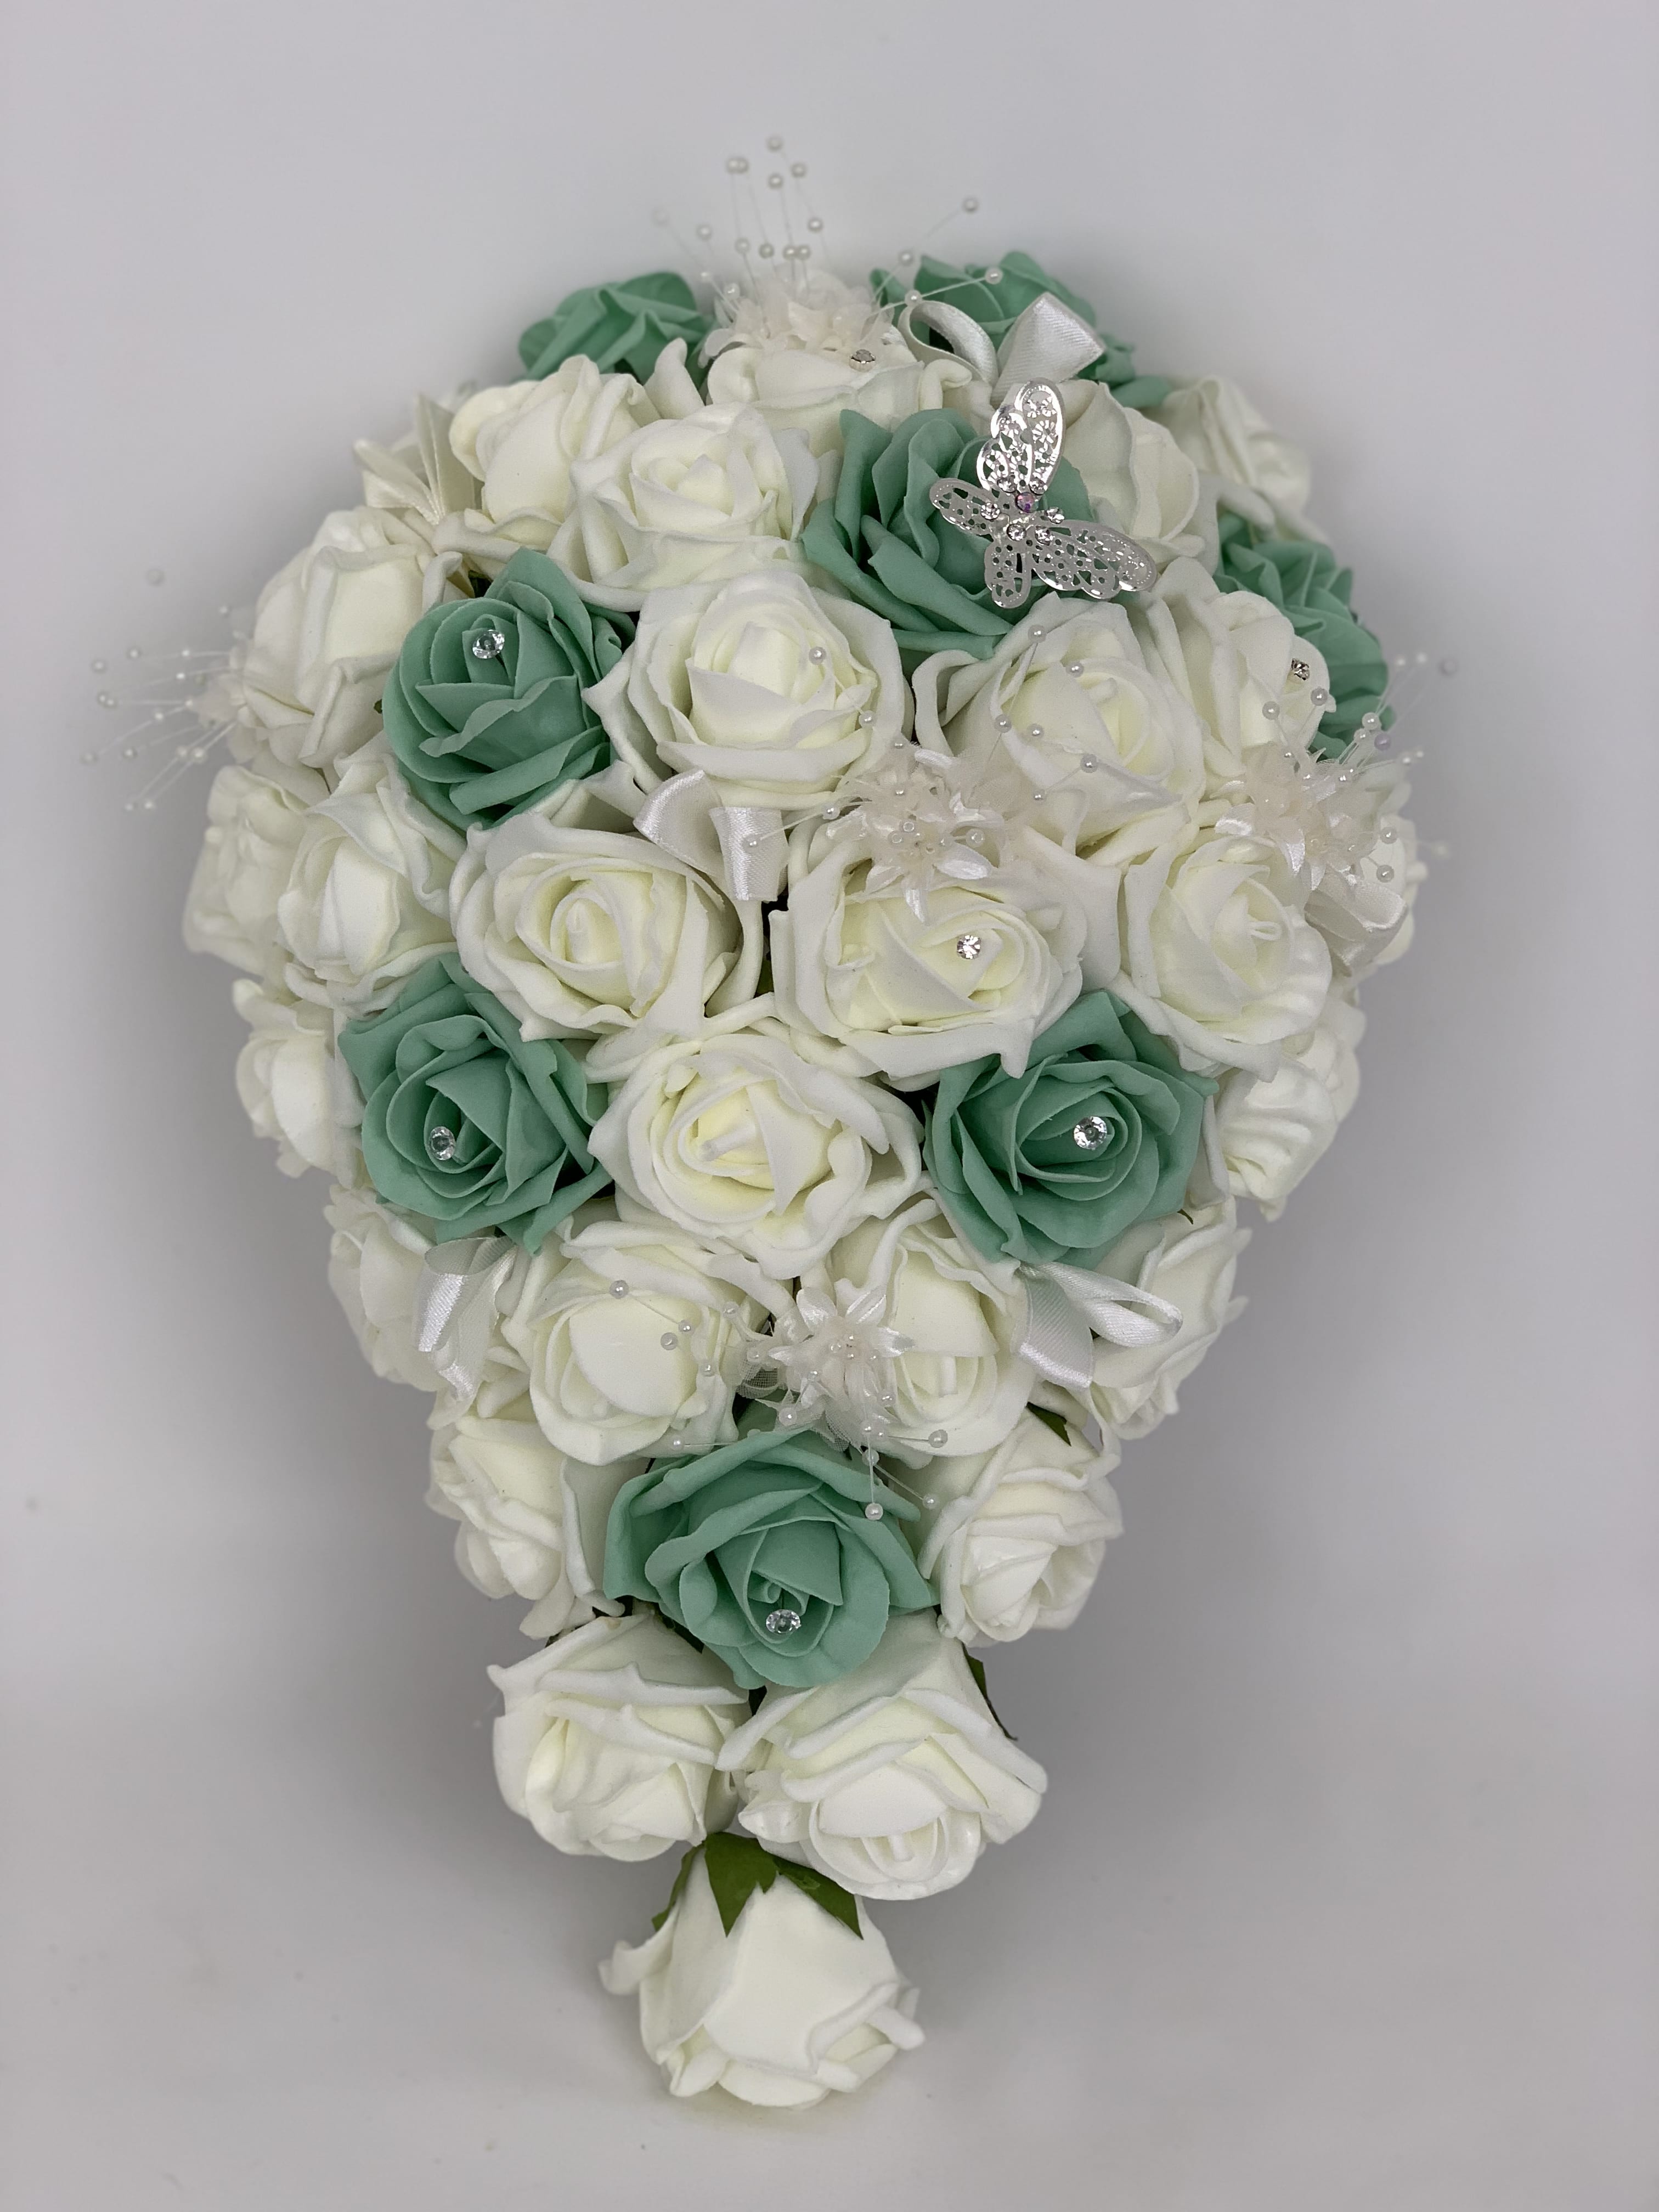 IVORY ROSES WEDDING FLOWERS SMALL TEARDROP BOUQUET 